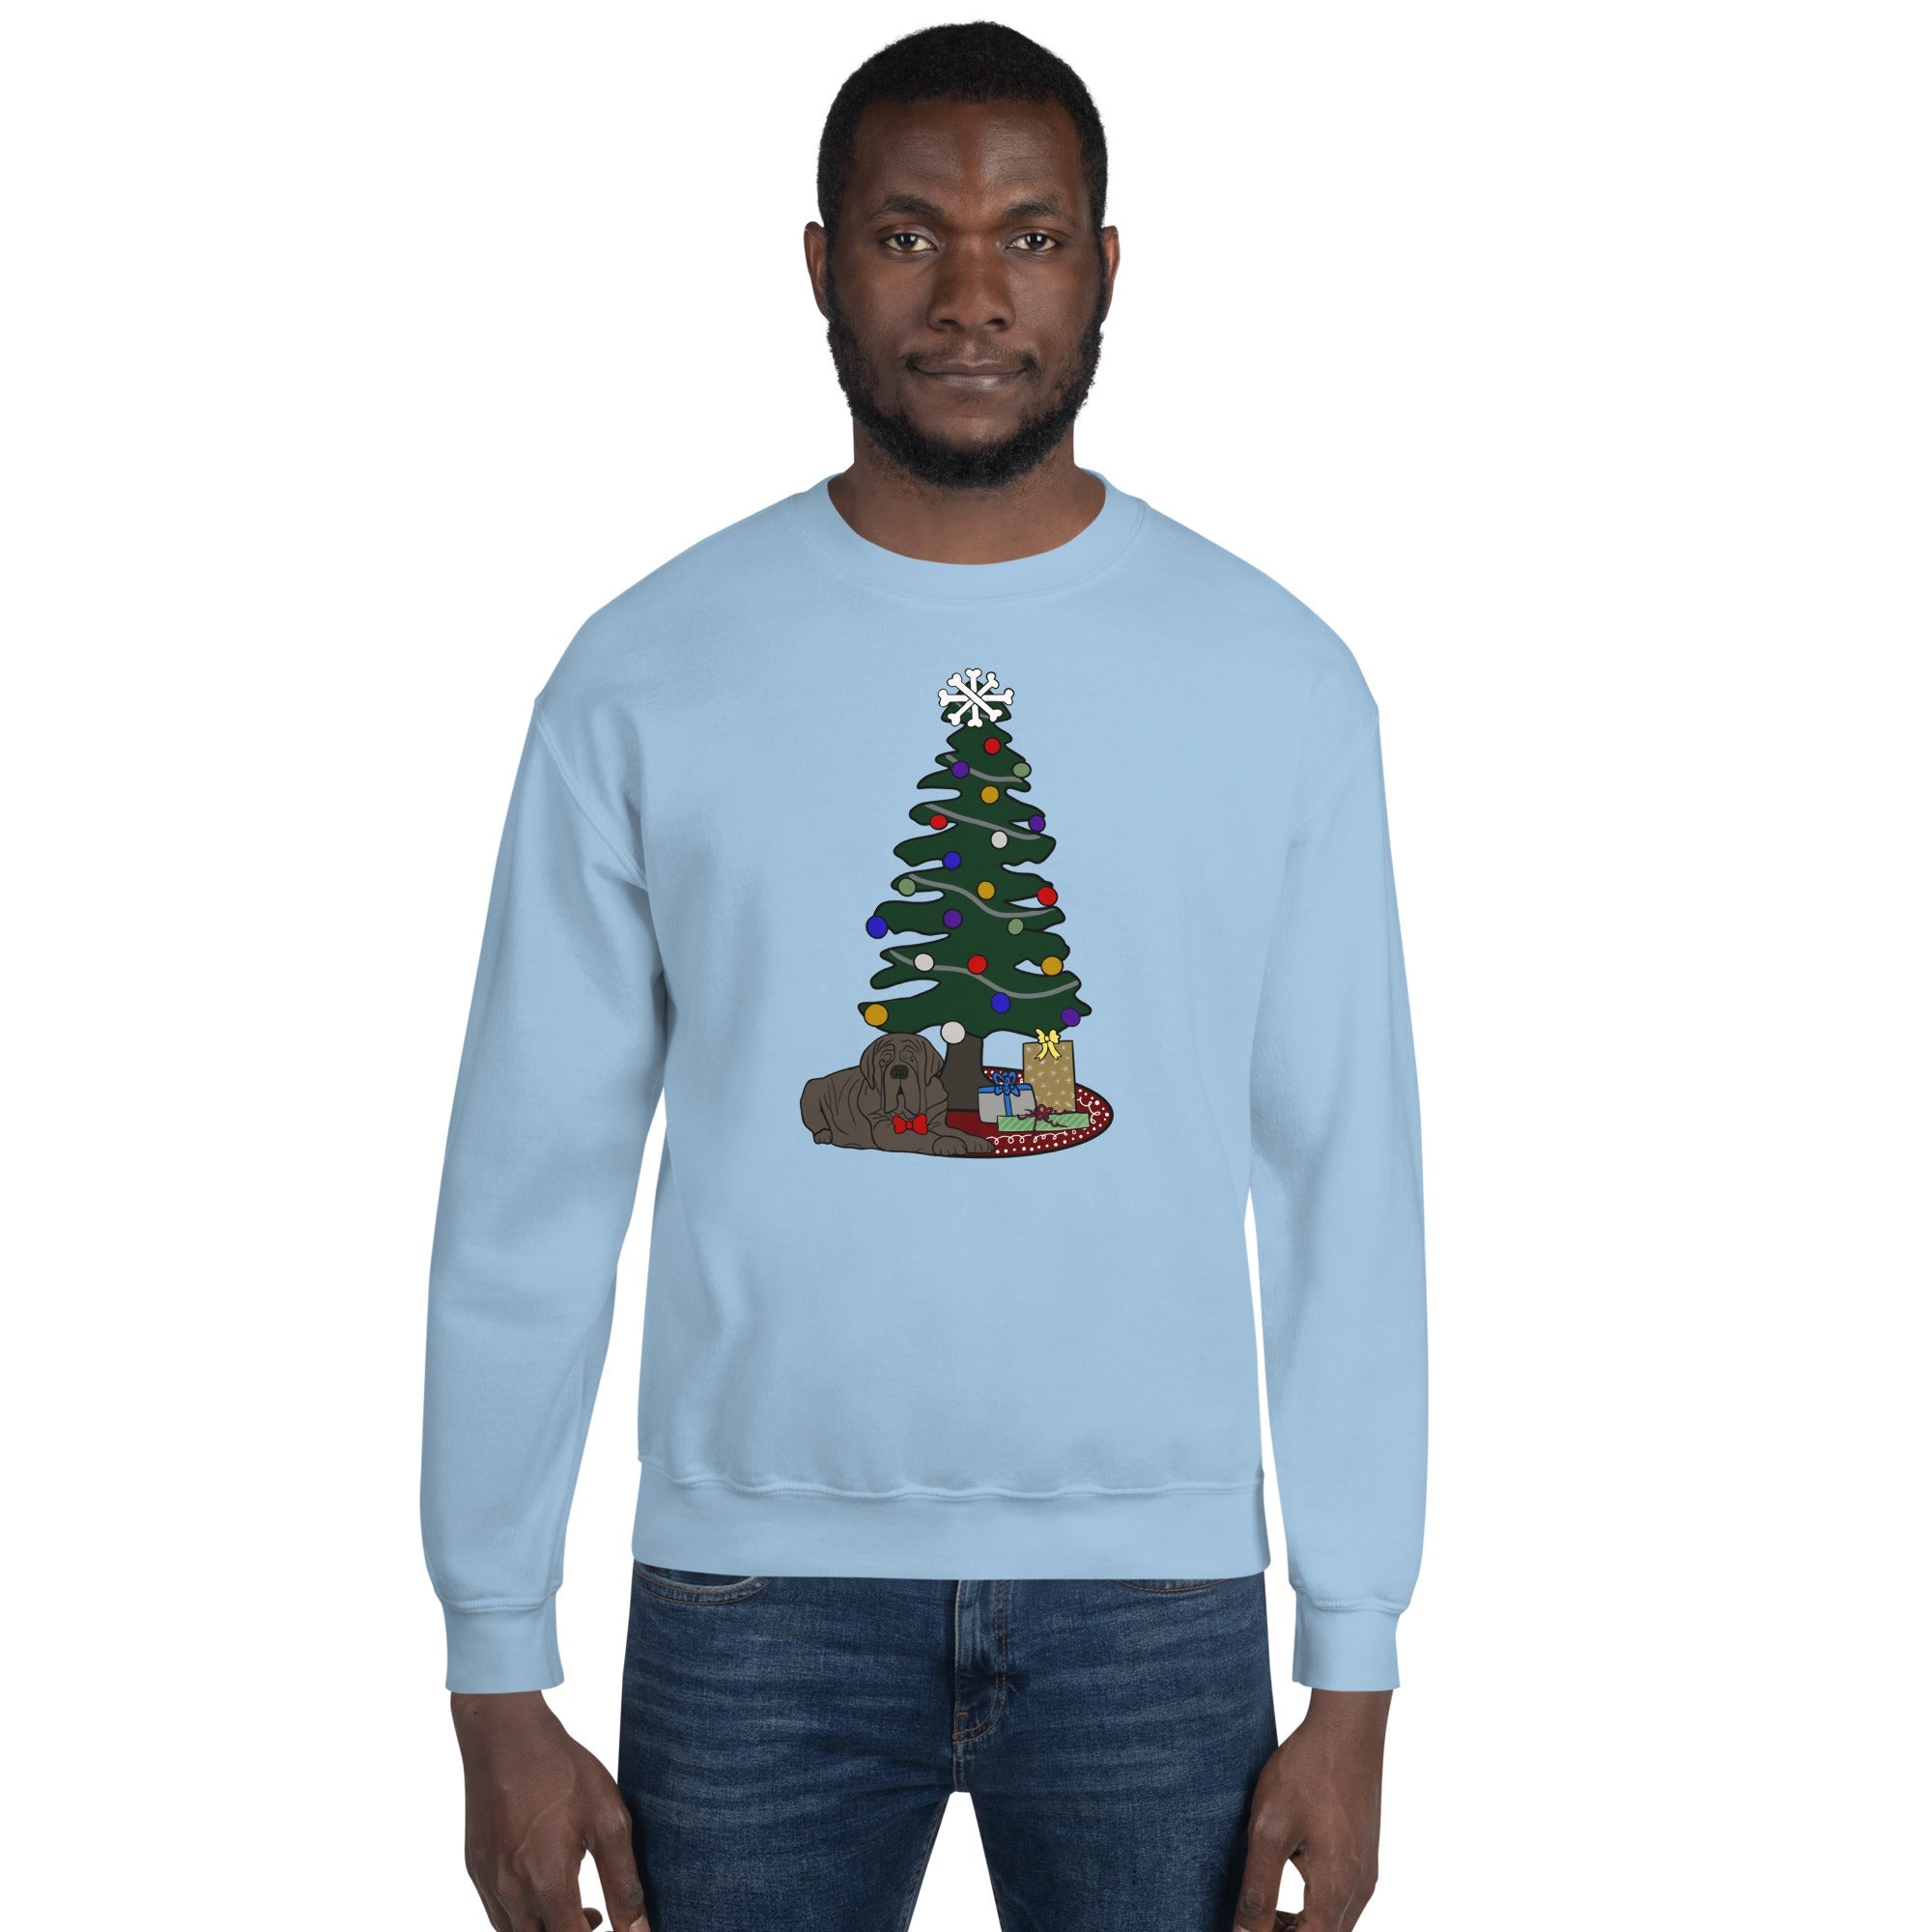 Chillin' Under the Christmas Tree Crewneck Sweatshirt - TAILWAGS UNLIMITED